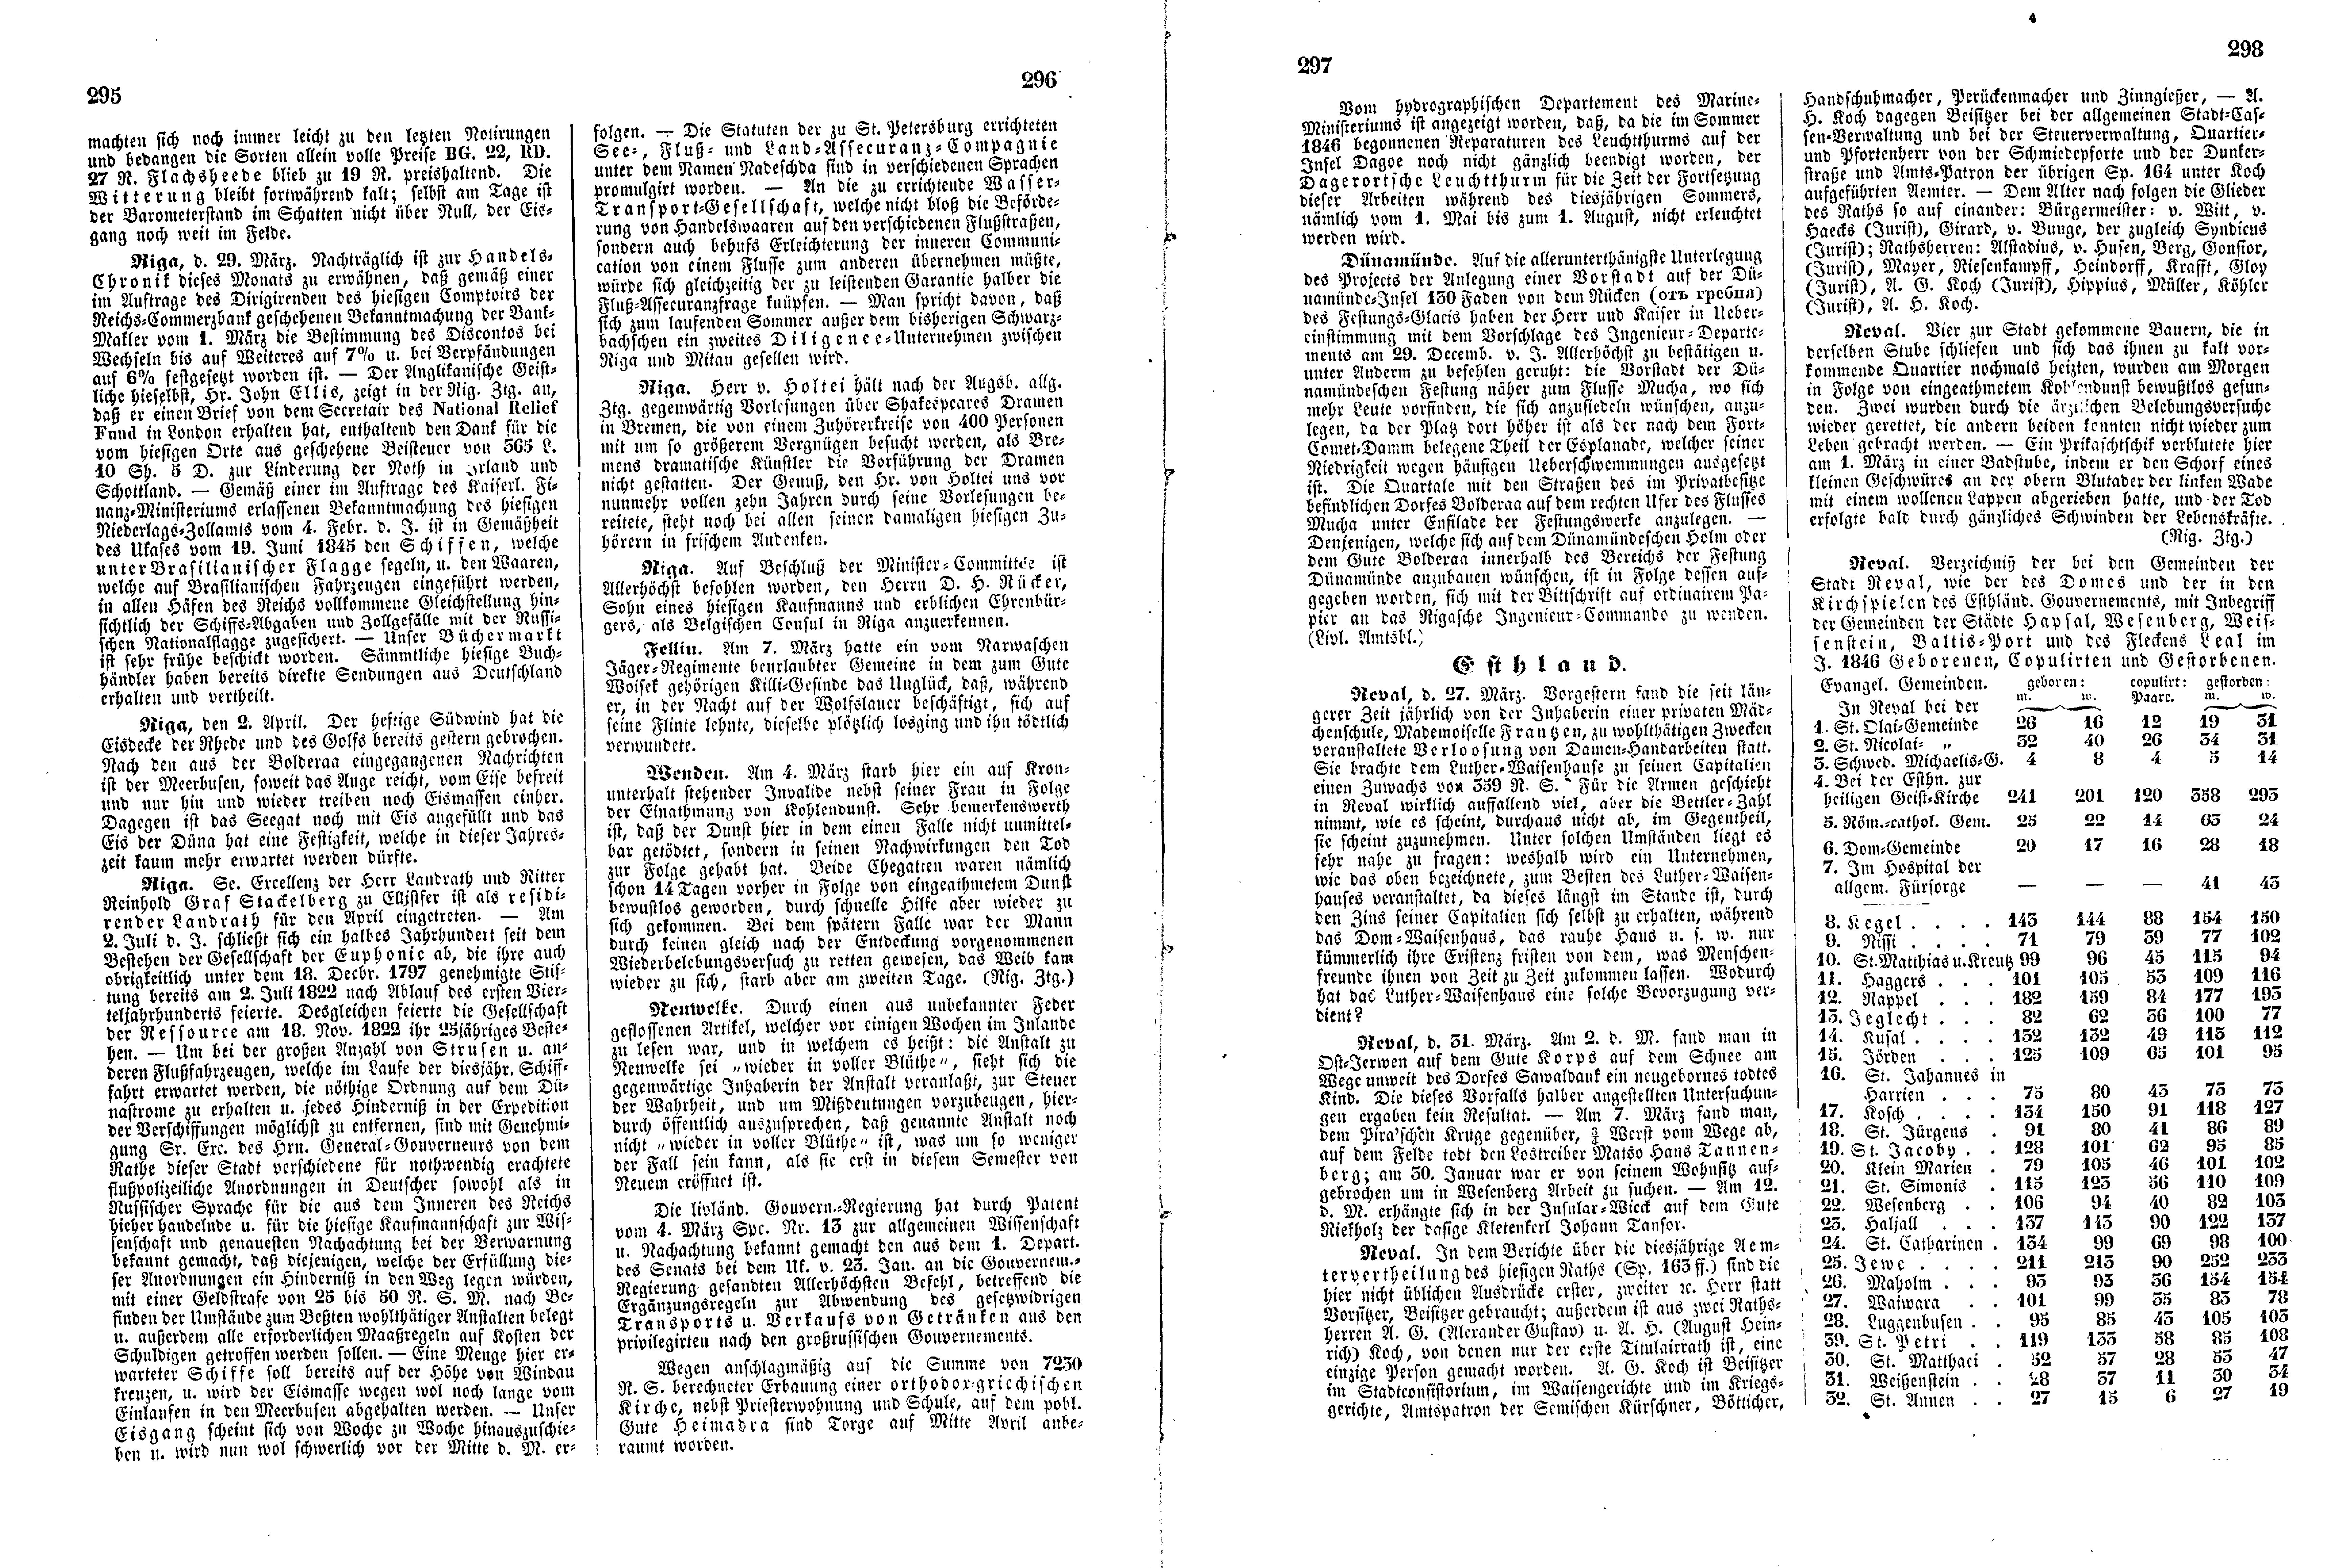 Das Inland [12] (1847) | 79. (295-298) Main body of text